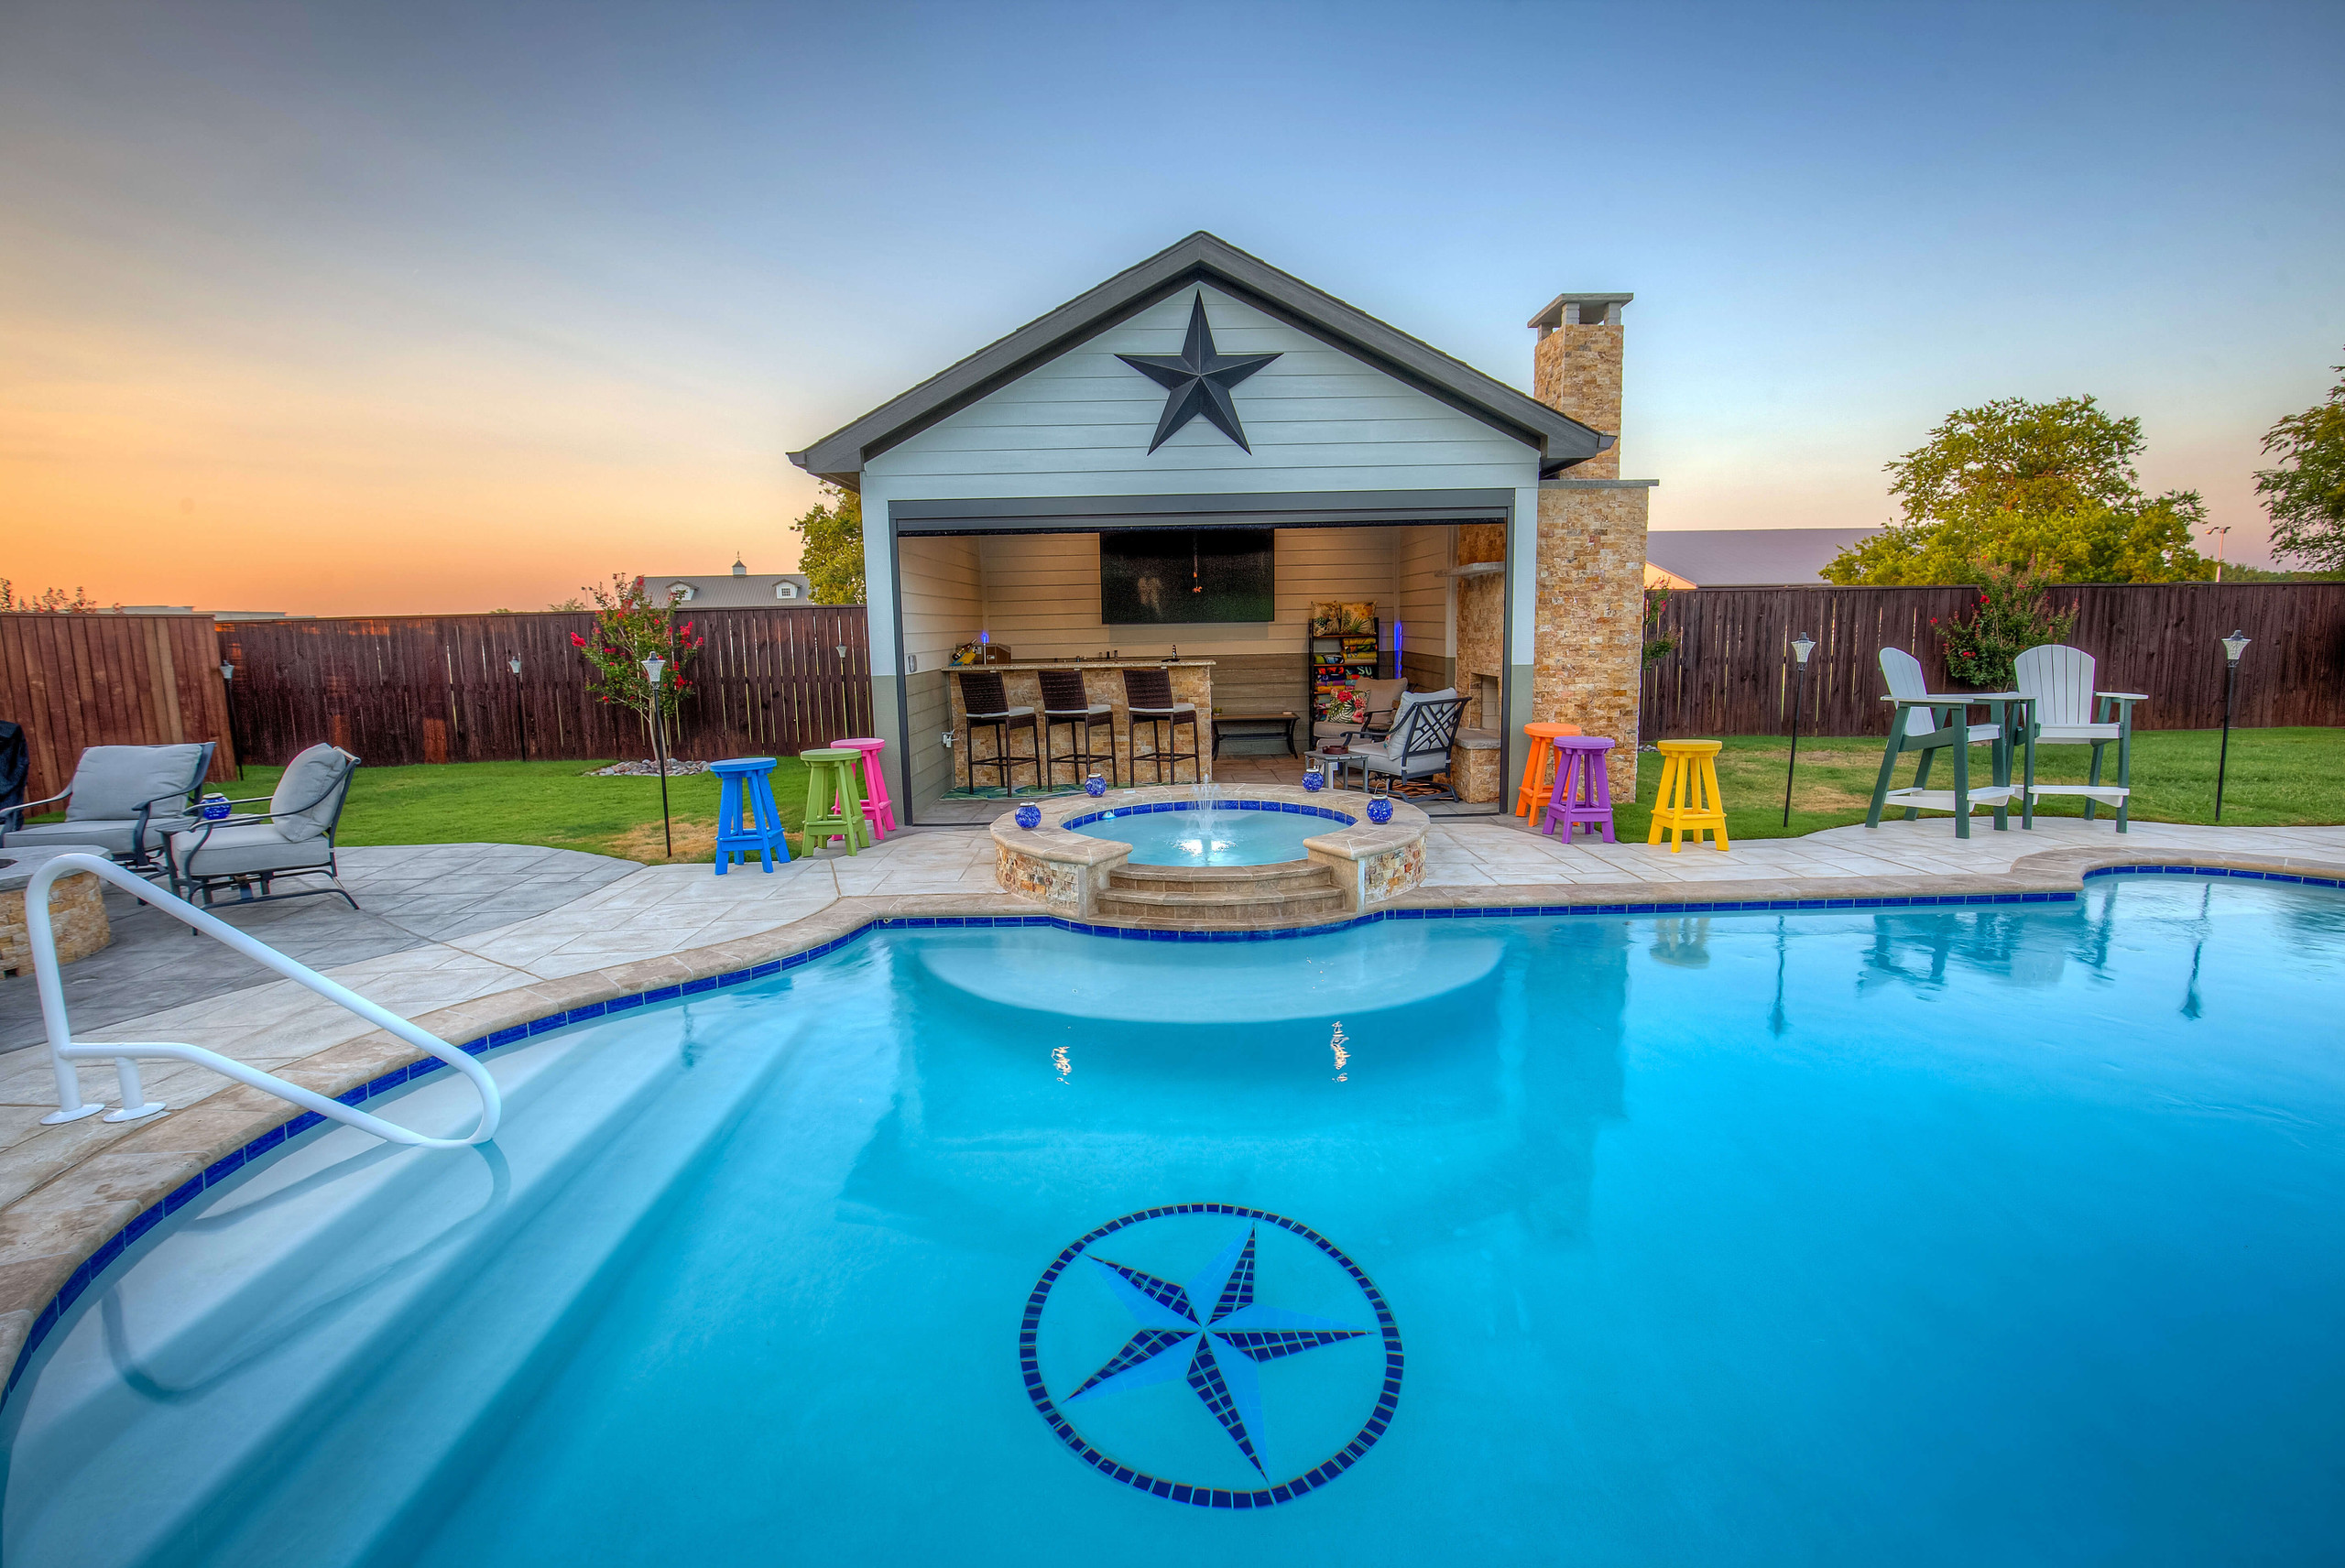 Dallas texas pool remodel design carvestone pool deck and patio cover